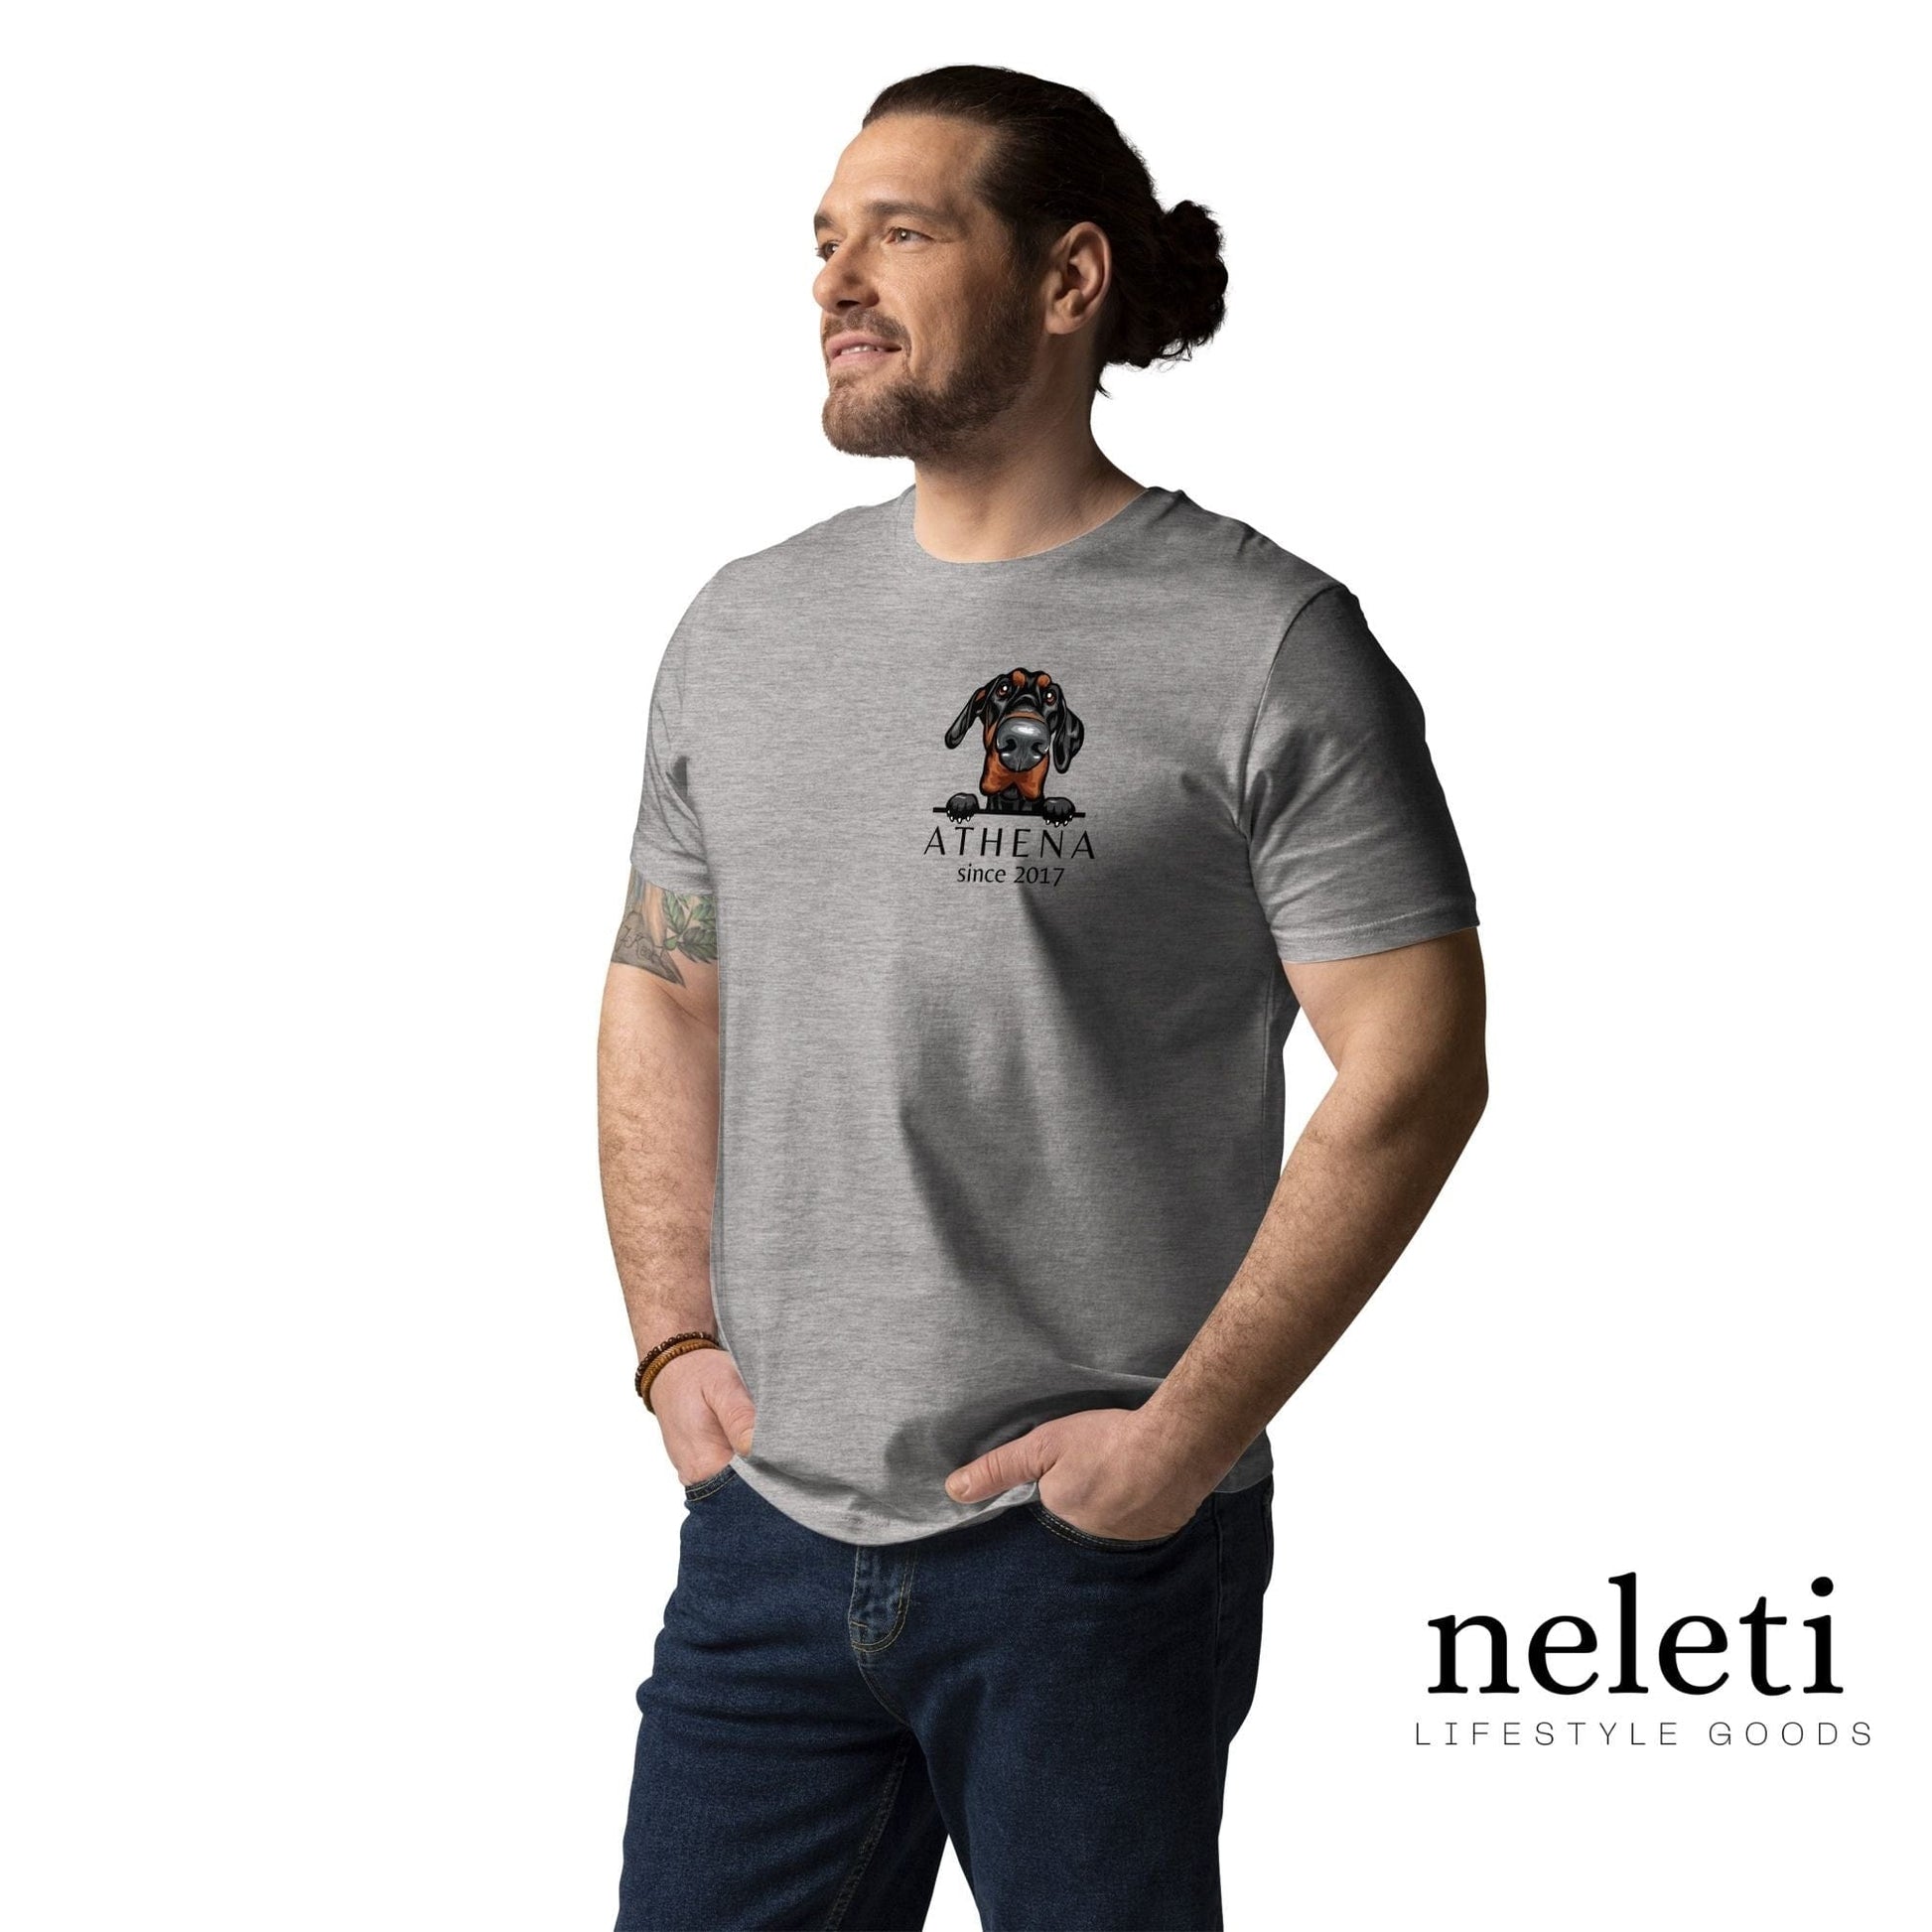 neleti.com-custom-heather-grey-shirt-for-dog-dad